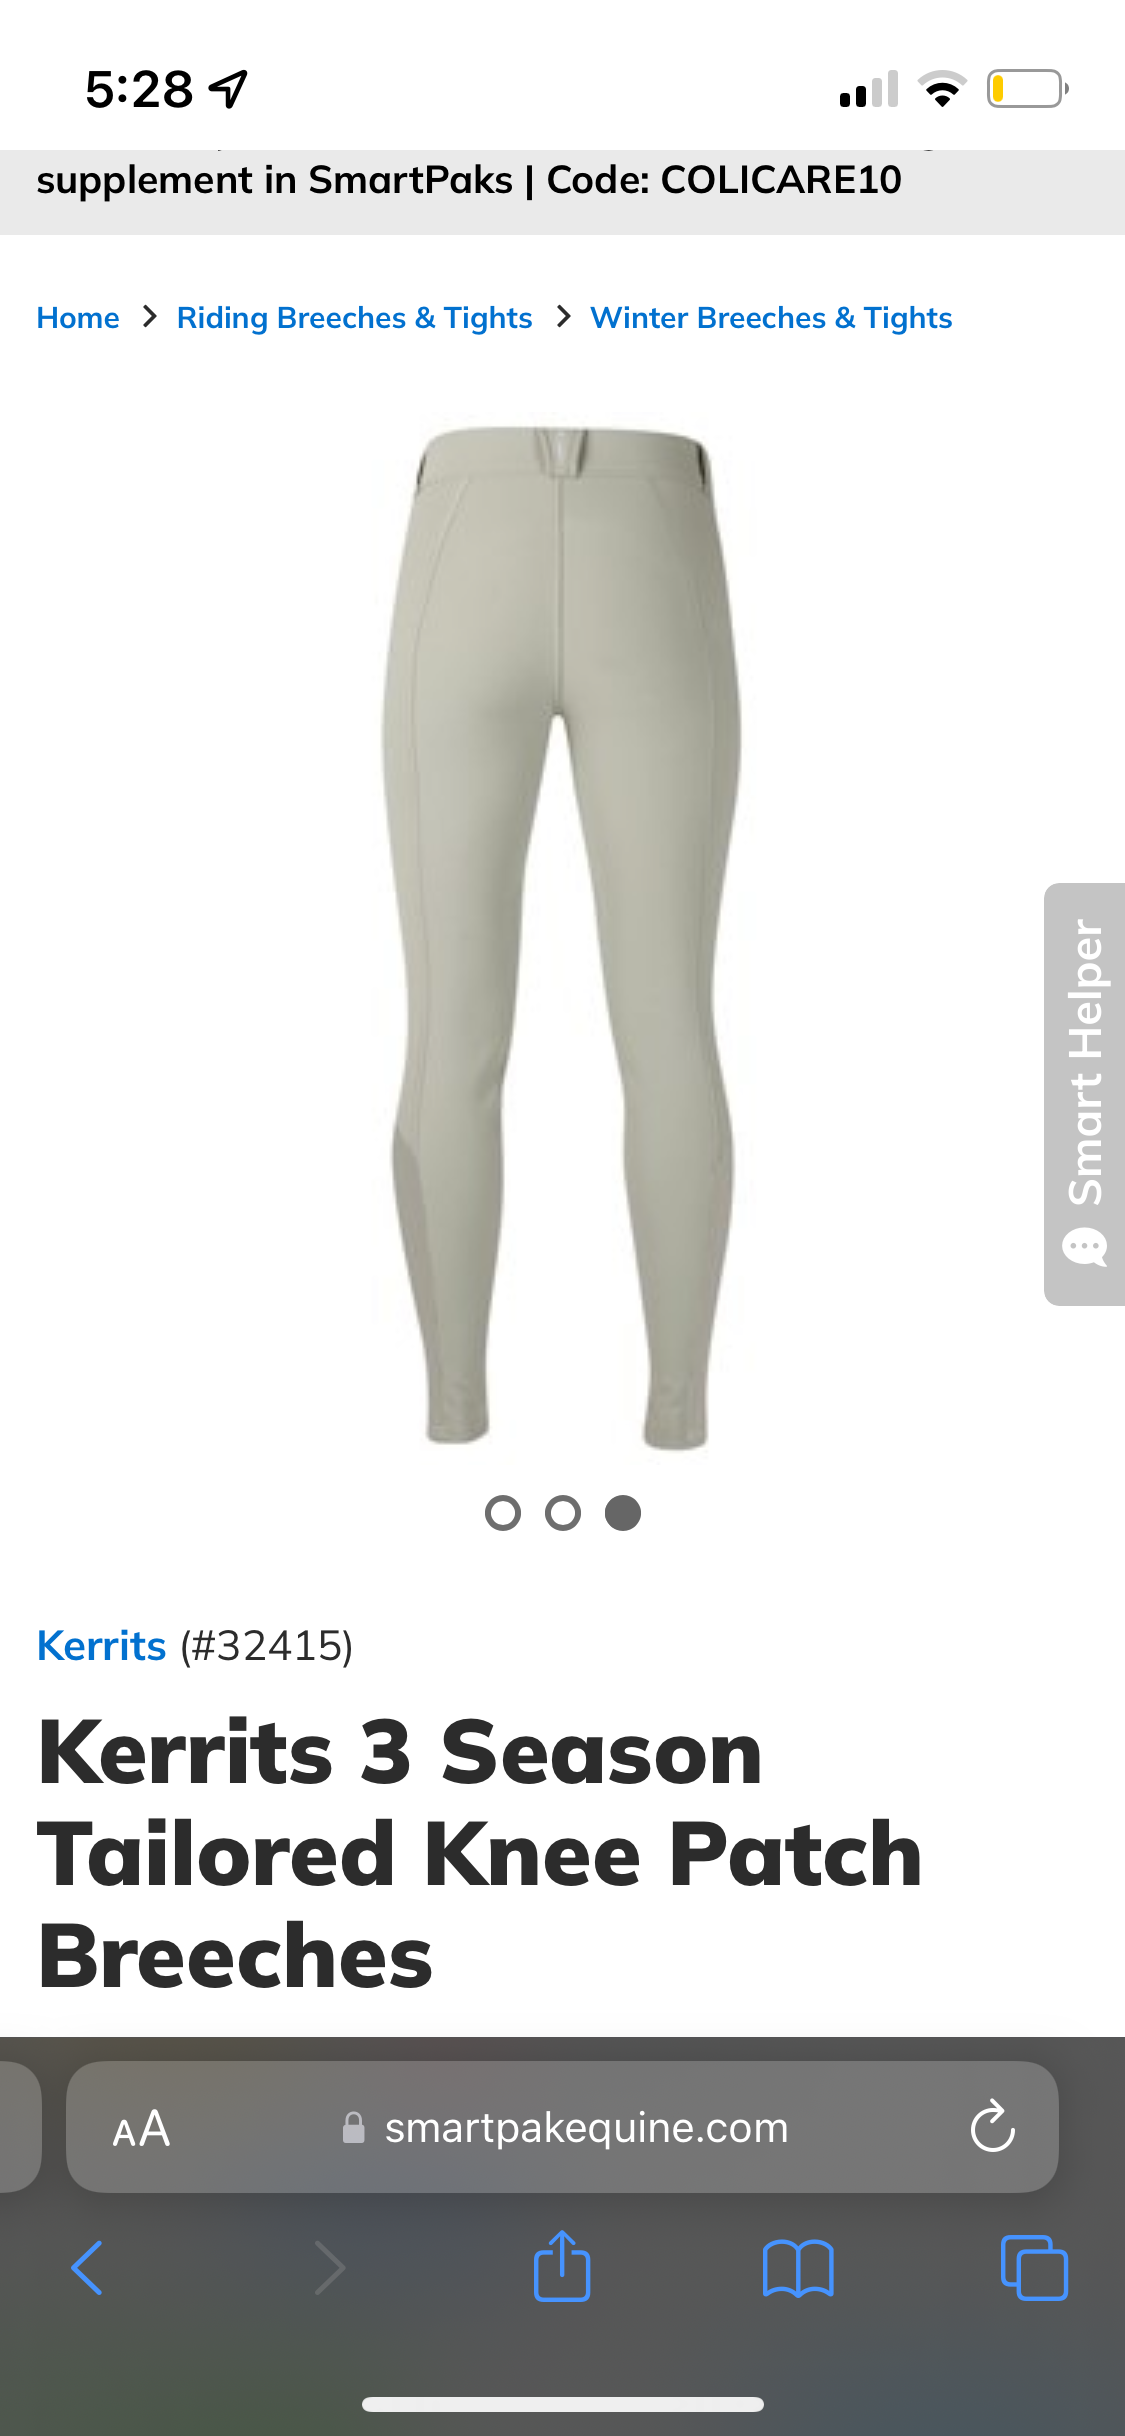 Kerrits 3 Season Tailored Knee Patch Breeches